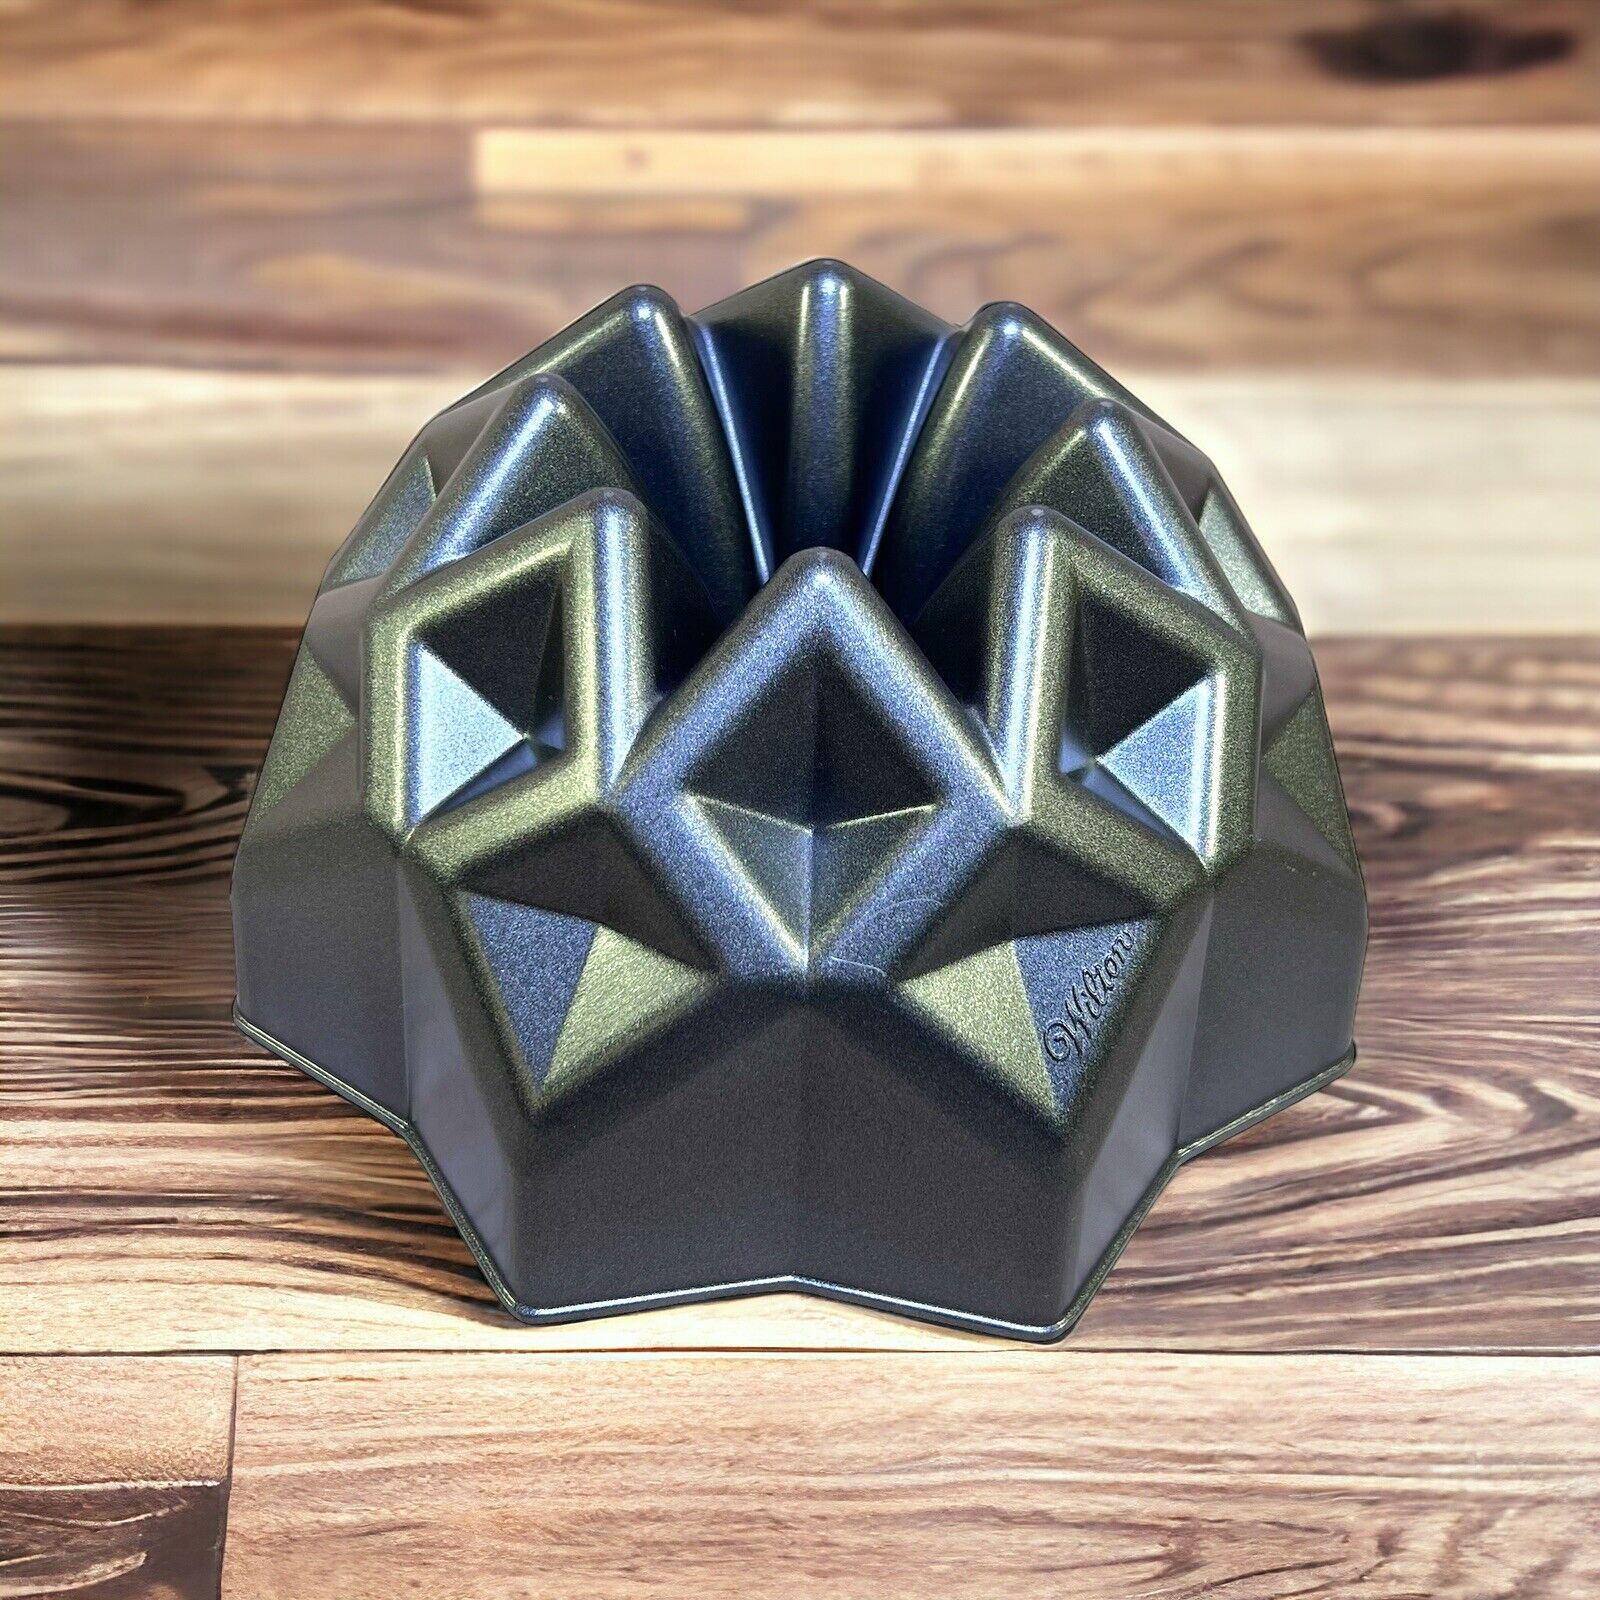 Wilton Dimensions Ultra Bake Diamond Star Bundt Cake Pan Nonstick Cast Aluminum